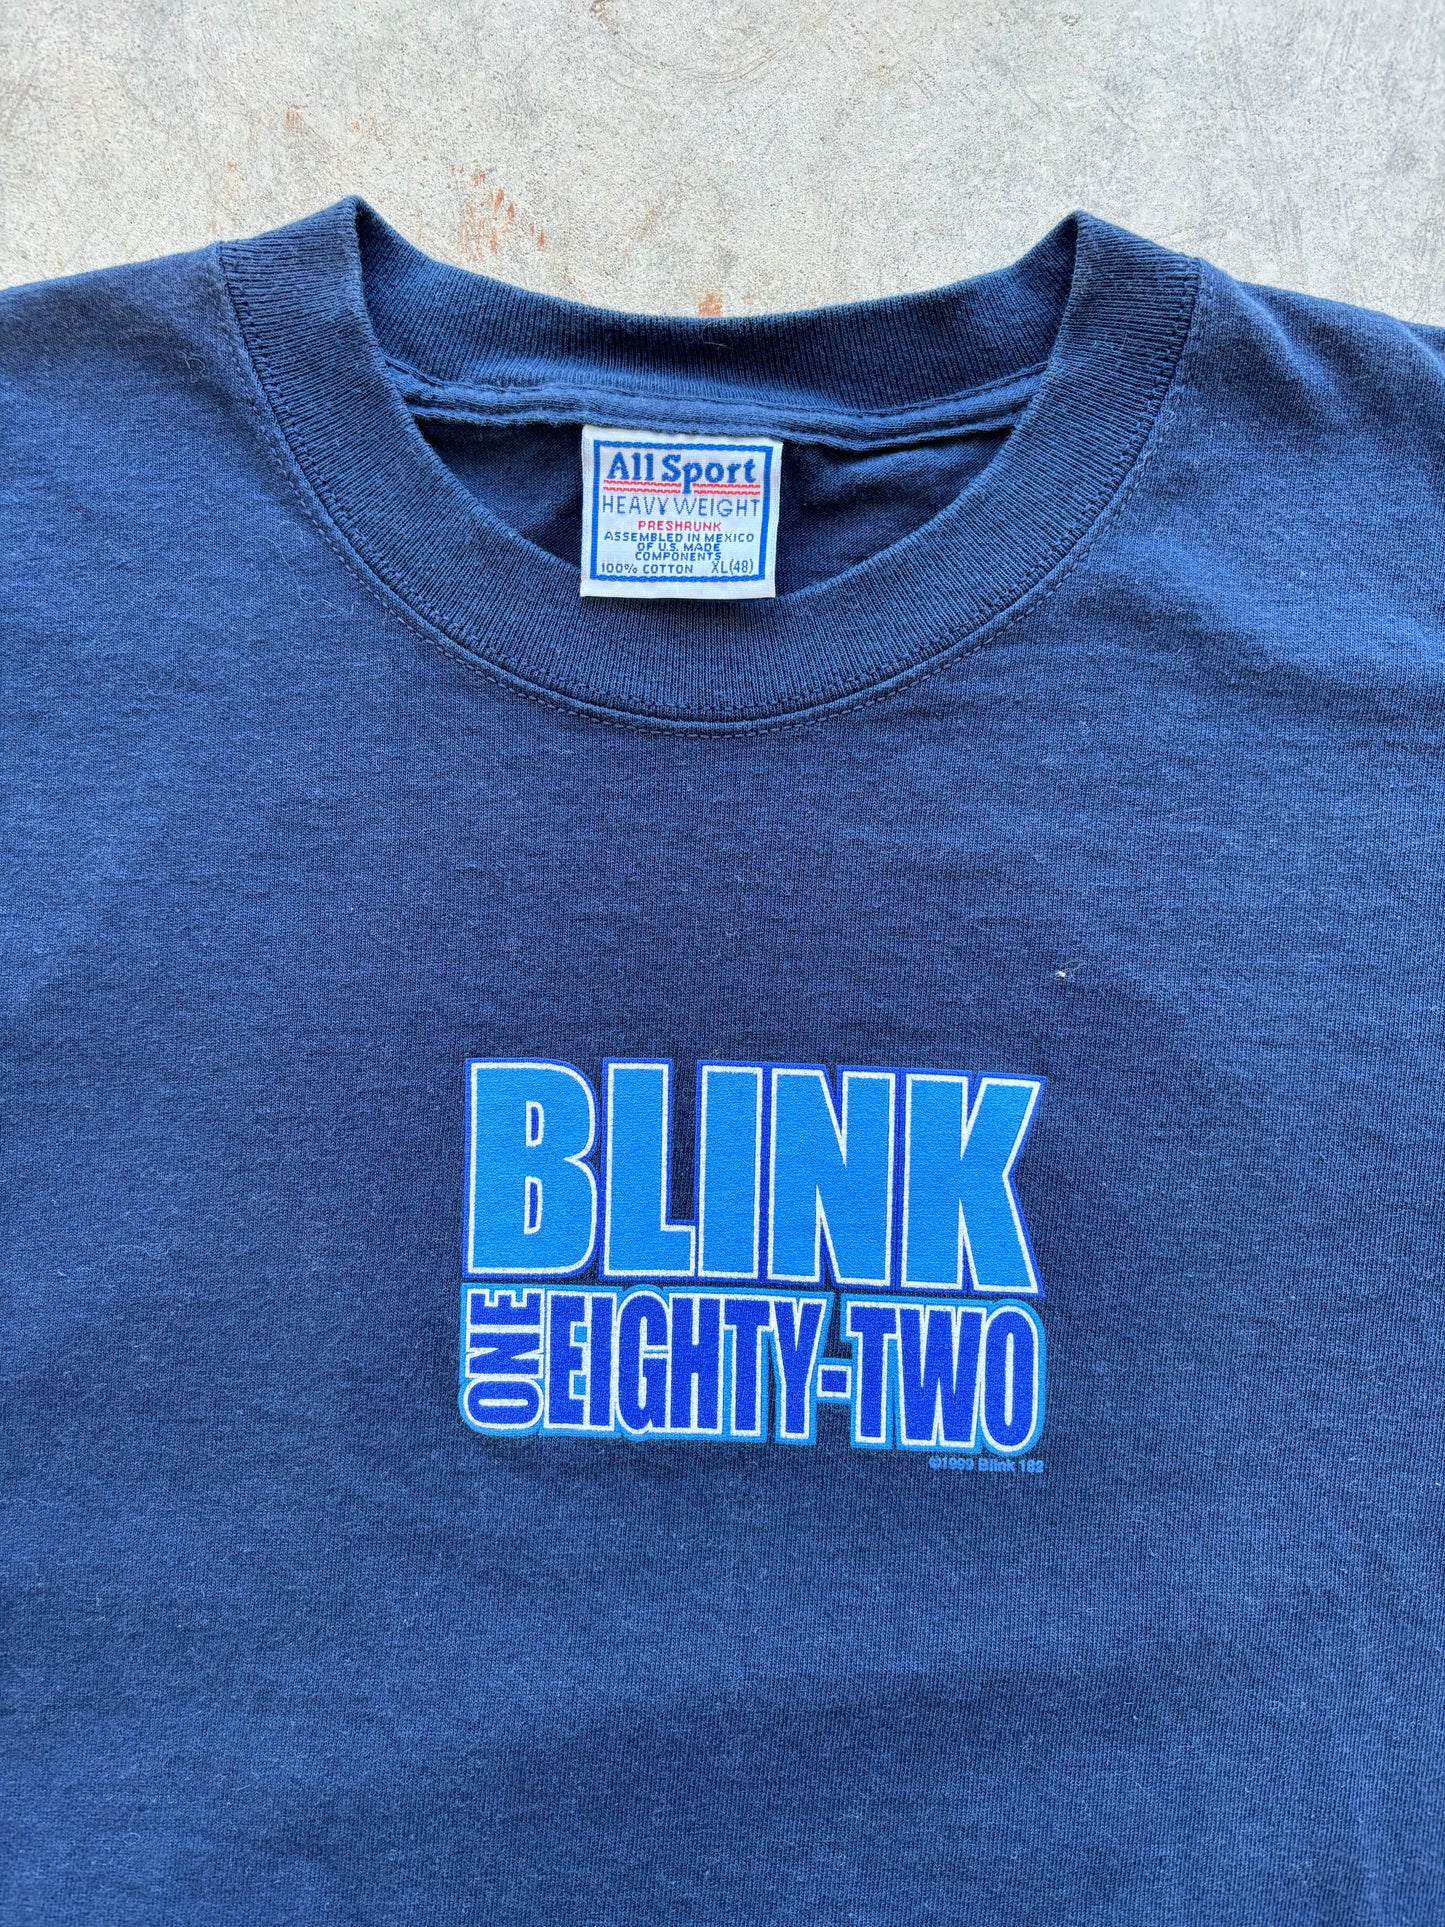 1999 Blink 182 Loserkids Tee Size XL